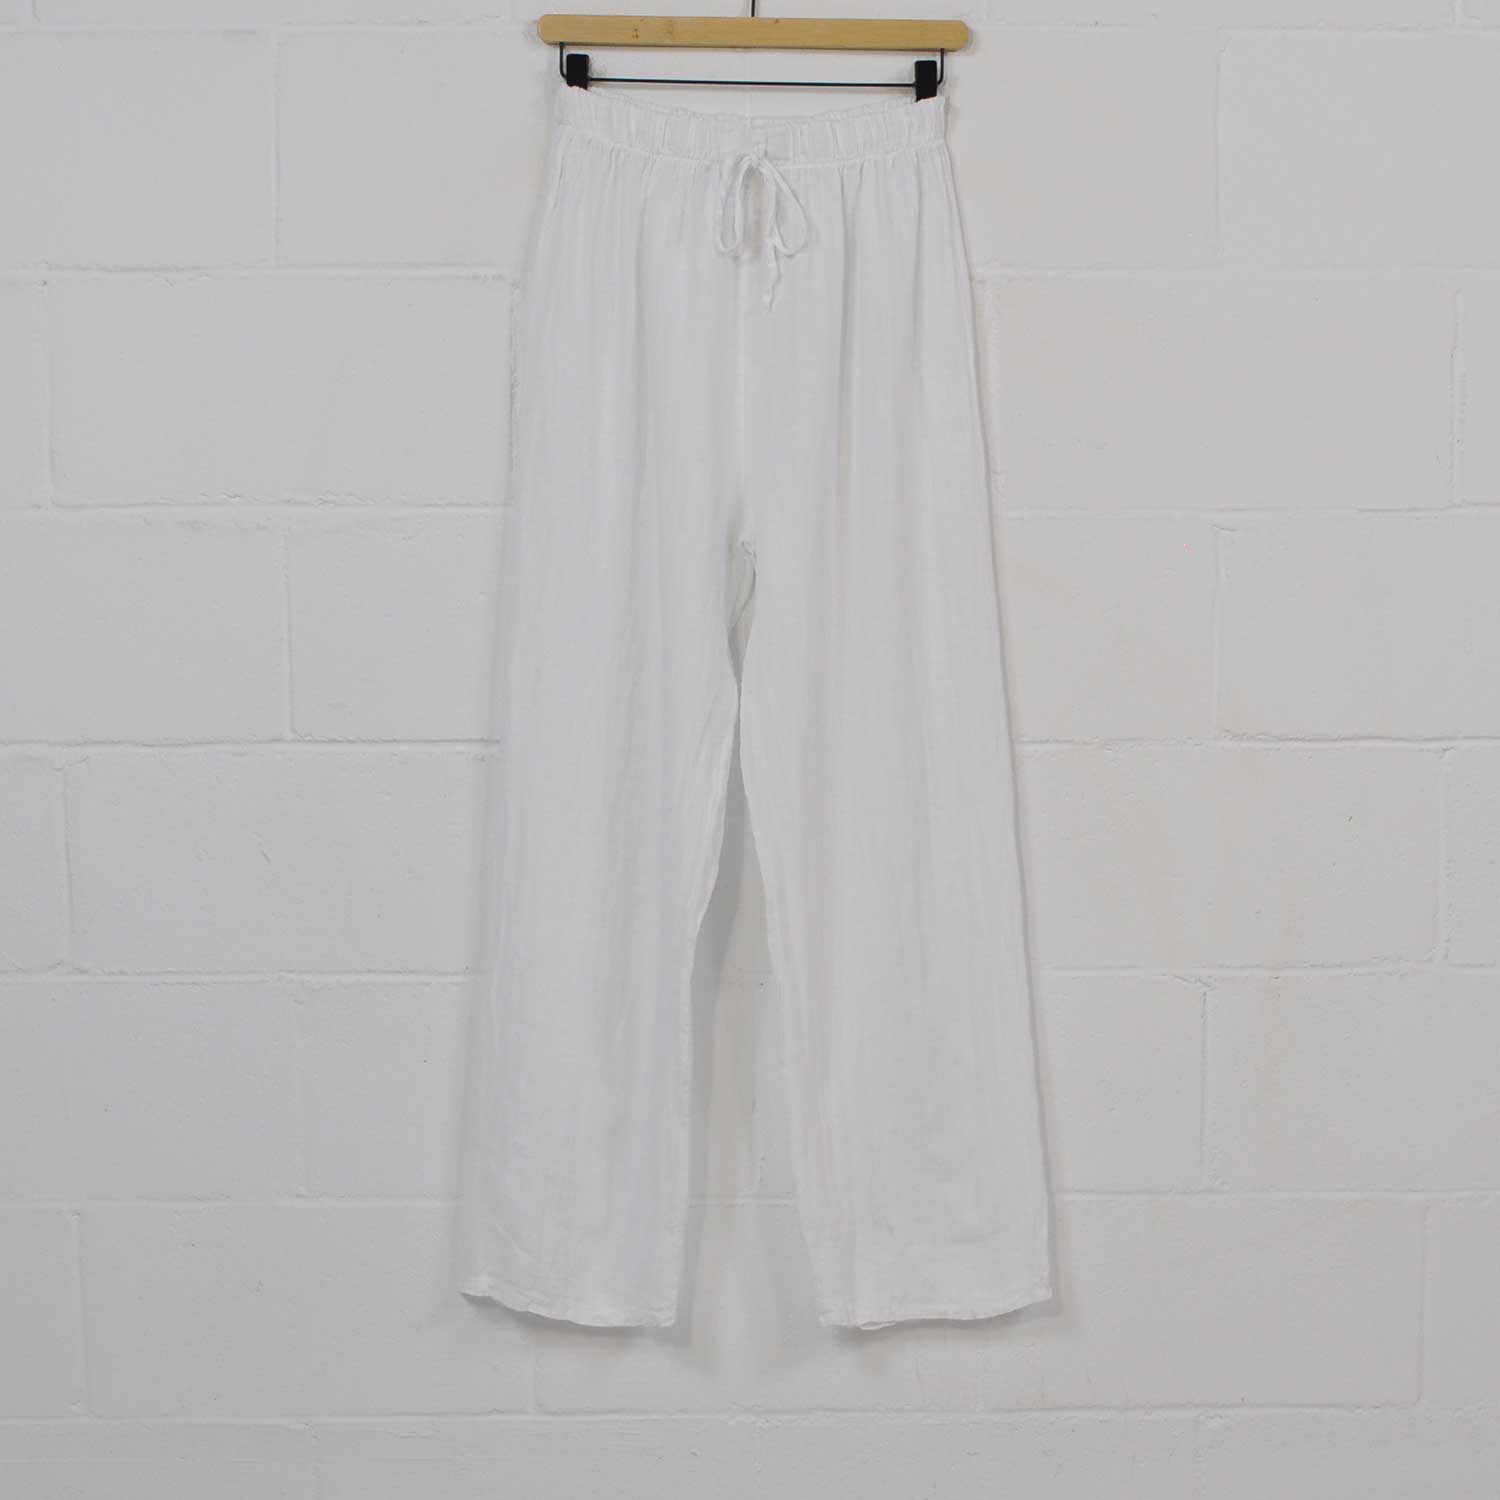 White wide linen pants